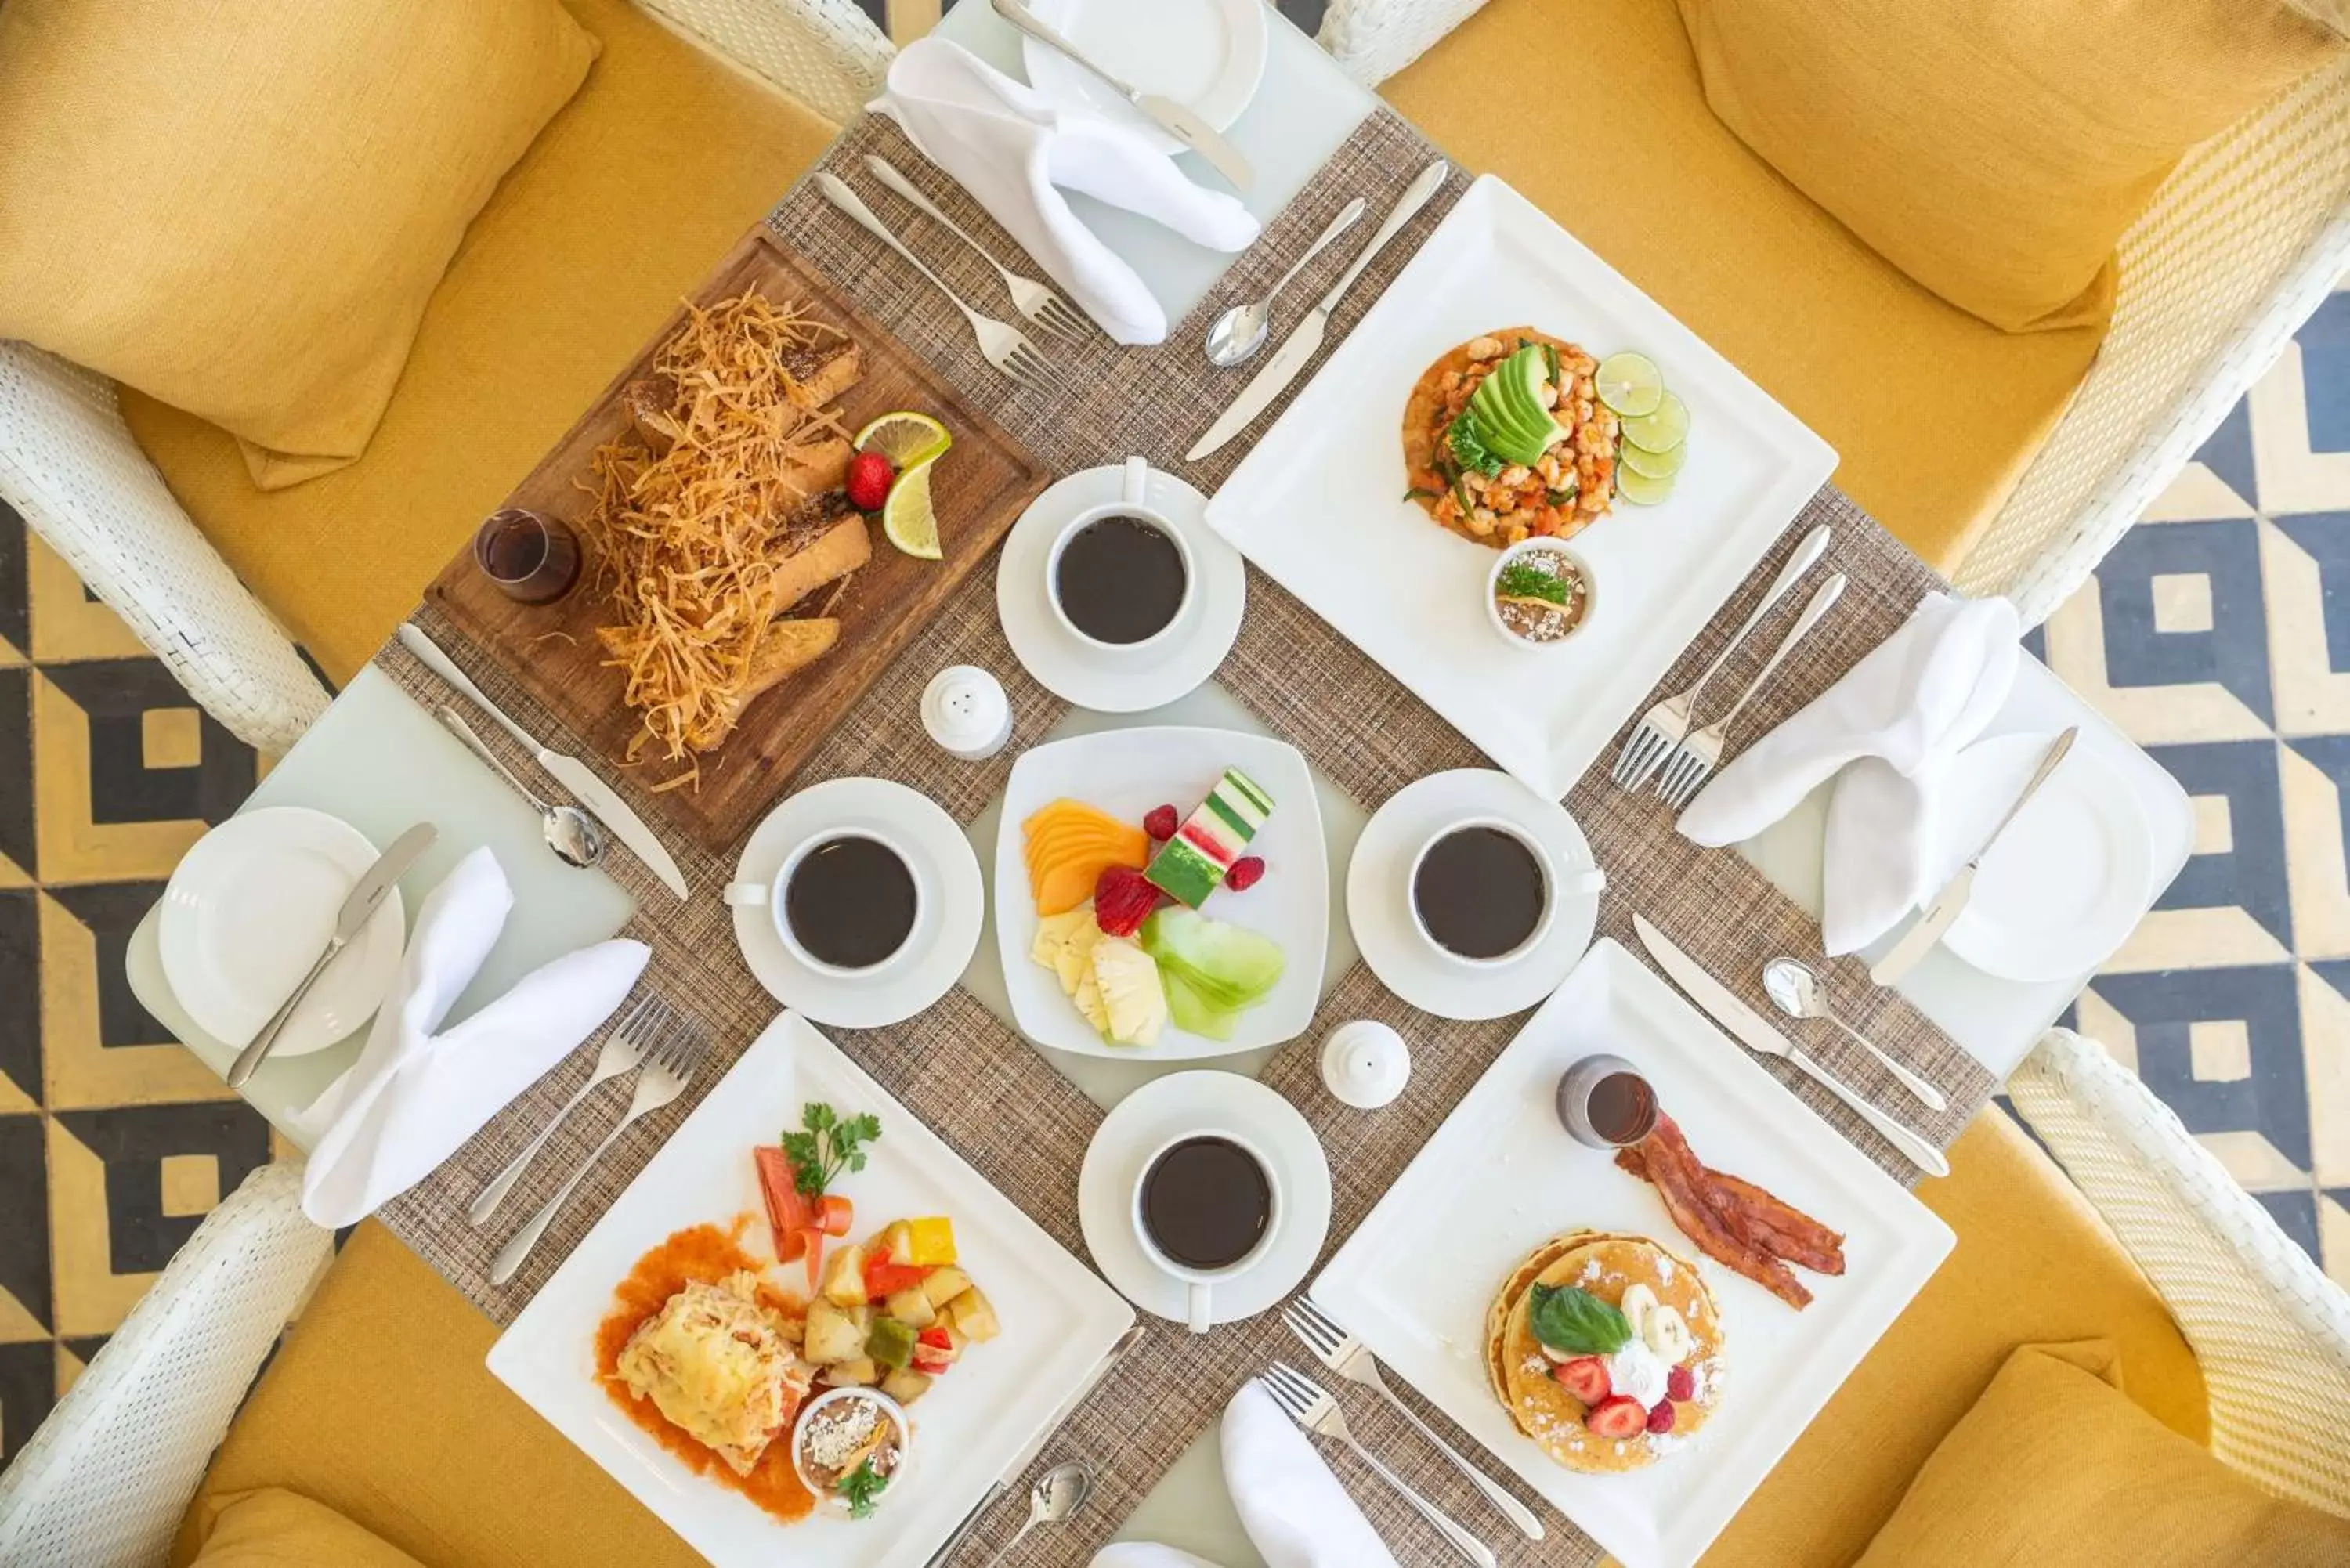 Restaurant/places to eat in DoubleTree by Hilton Mazatlan, SIN